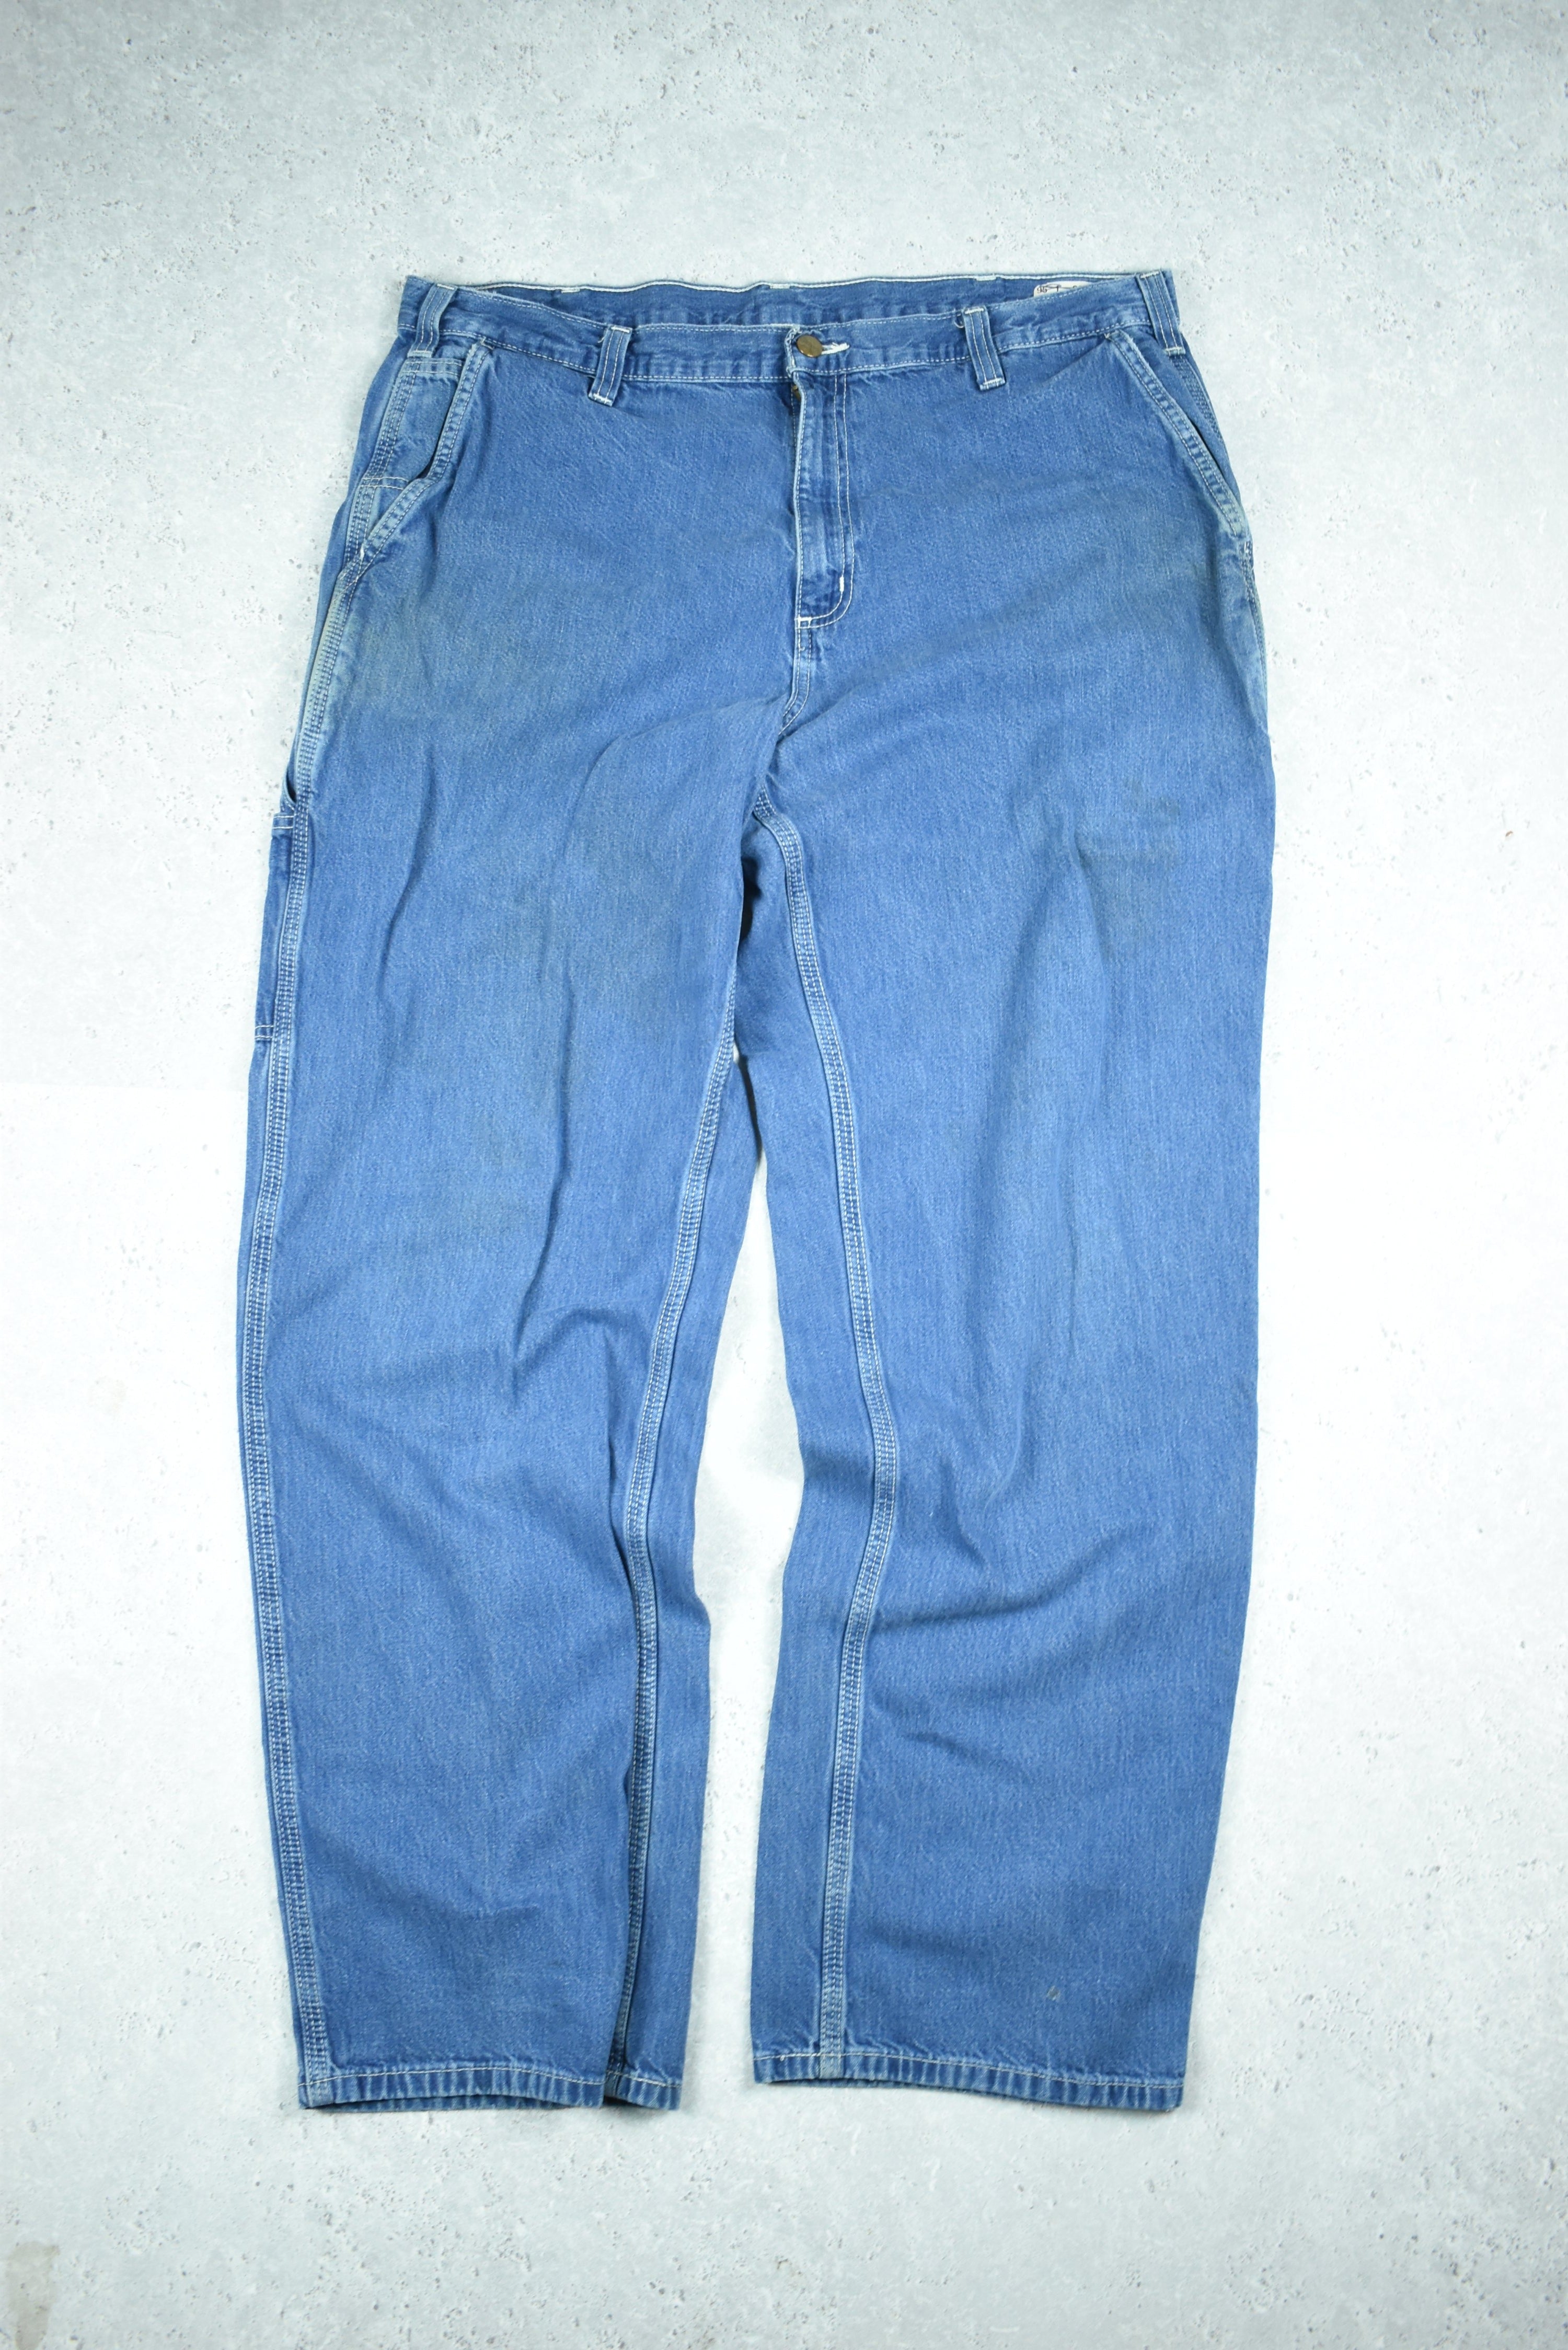 Vintage Carhartt Dungaree Fit Denim Jeans 38x32